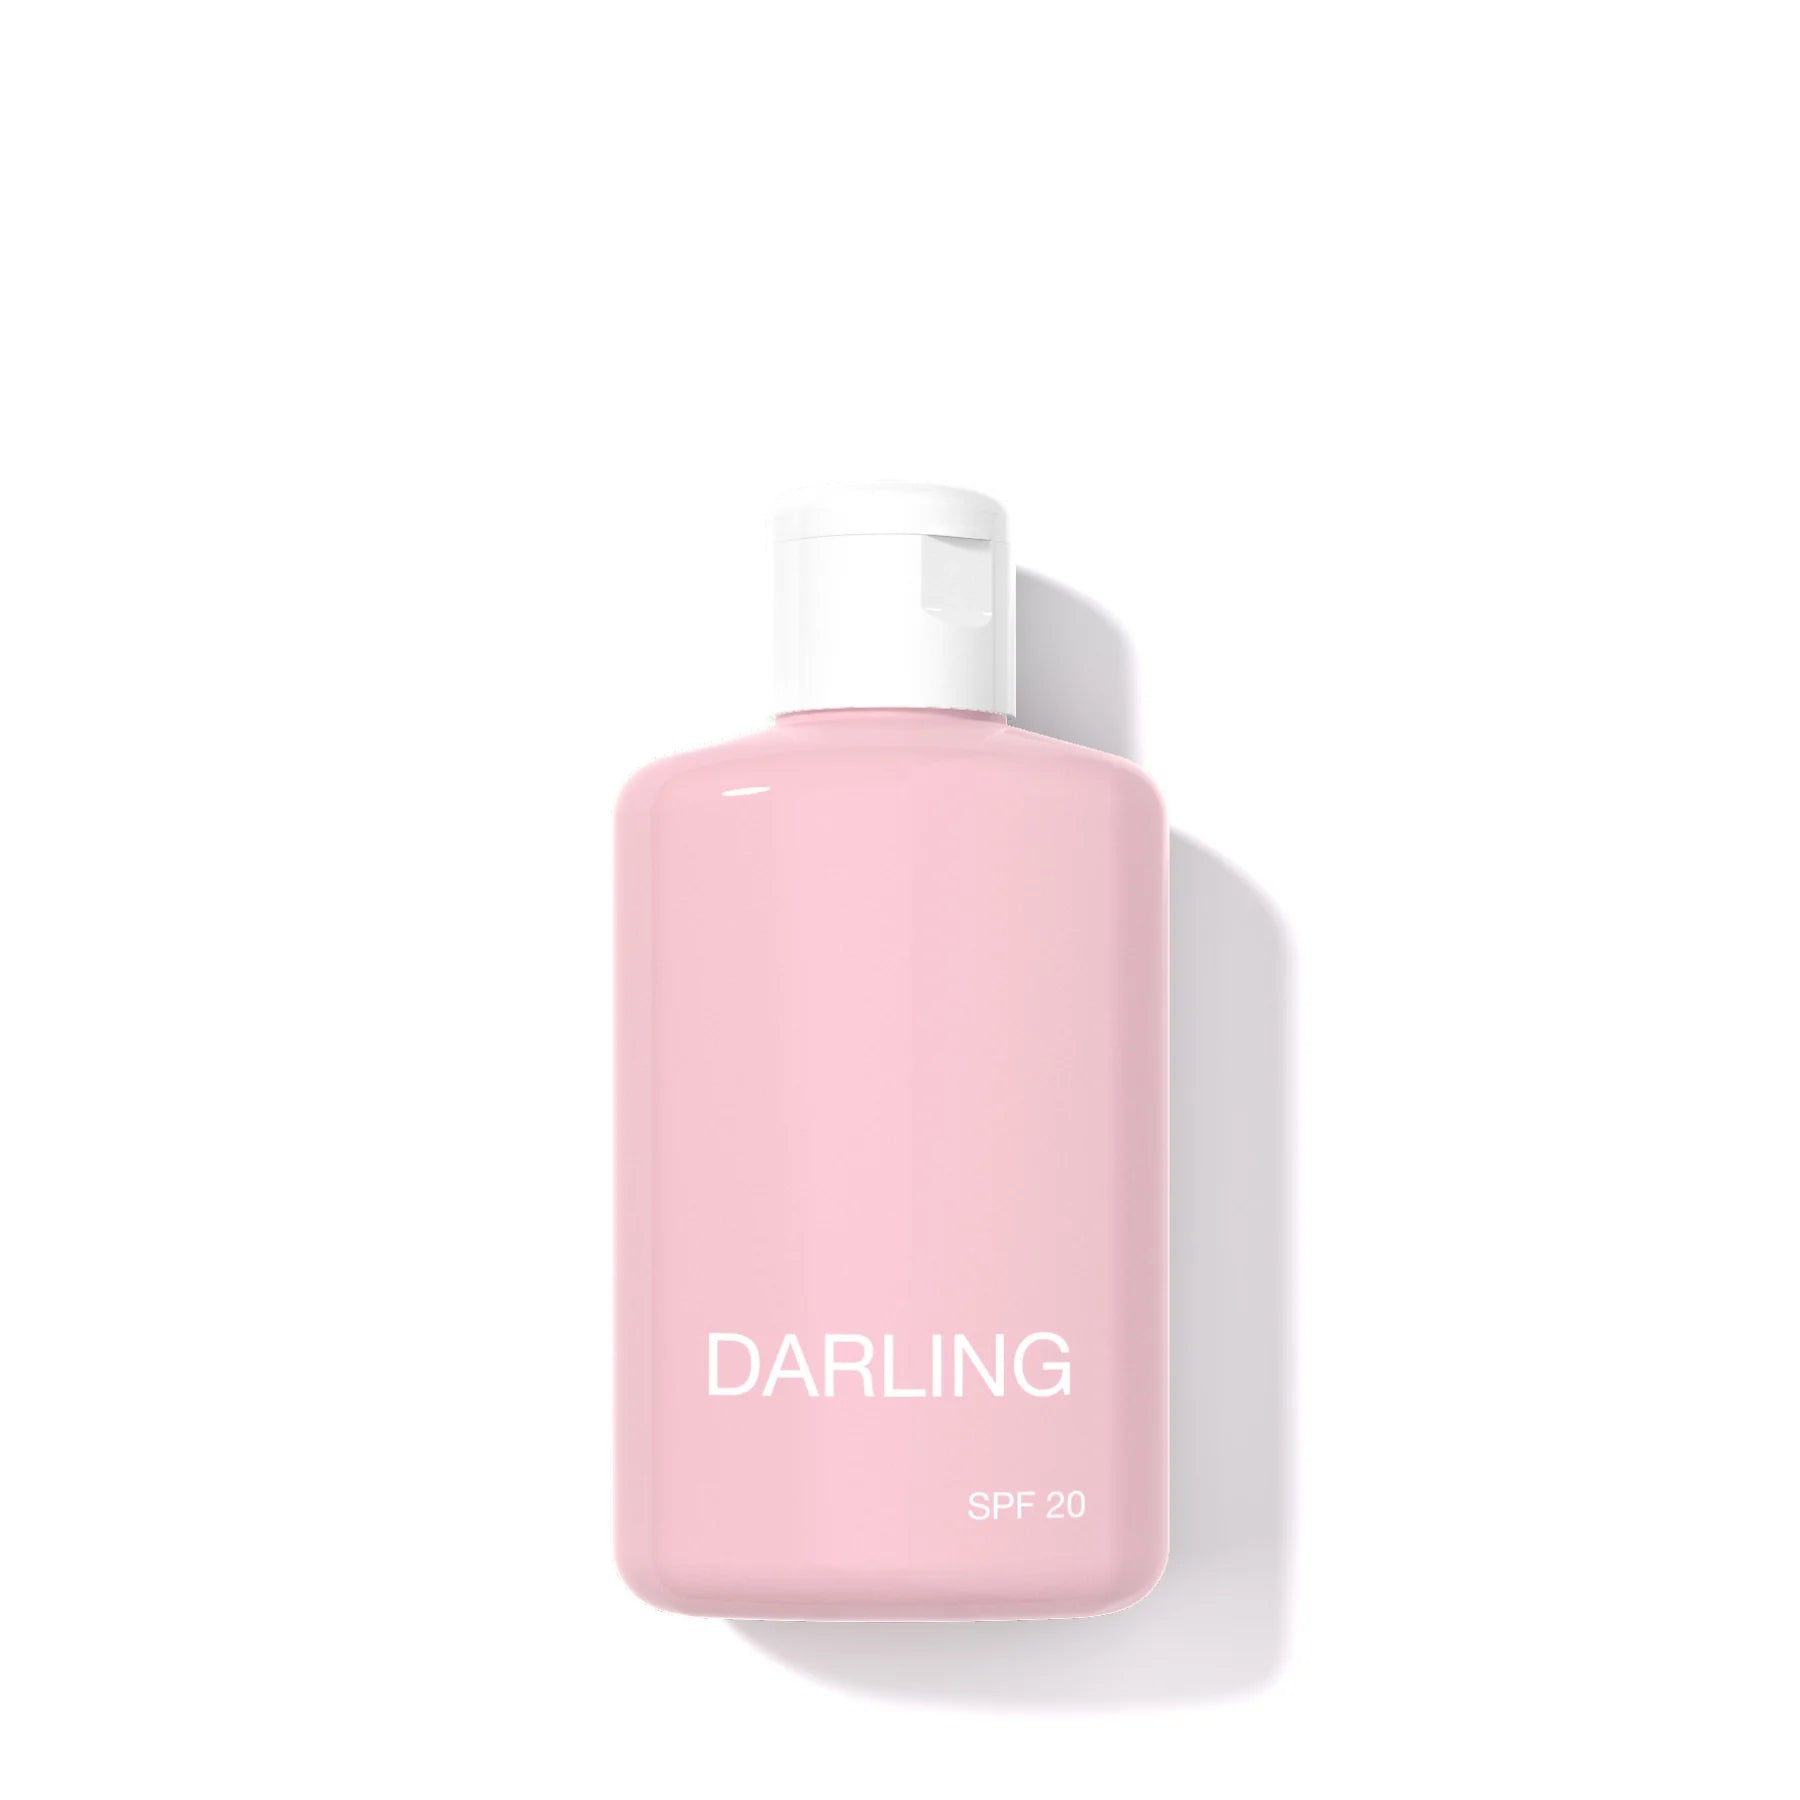 Darling medium protection lotion SPF 20 150 ml